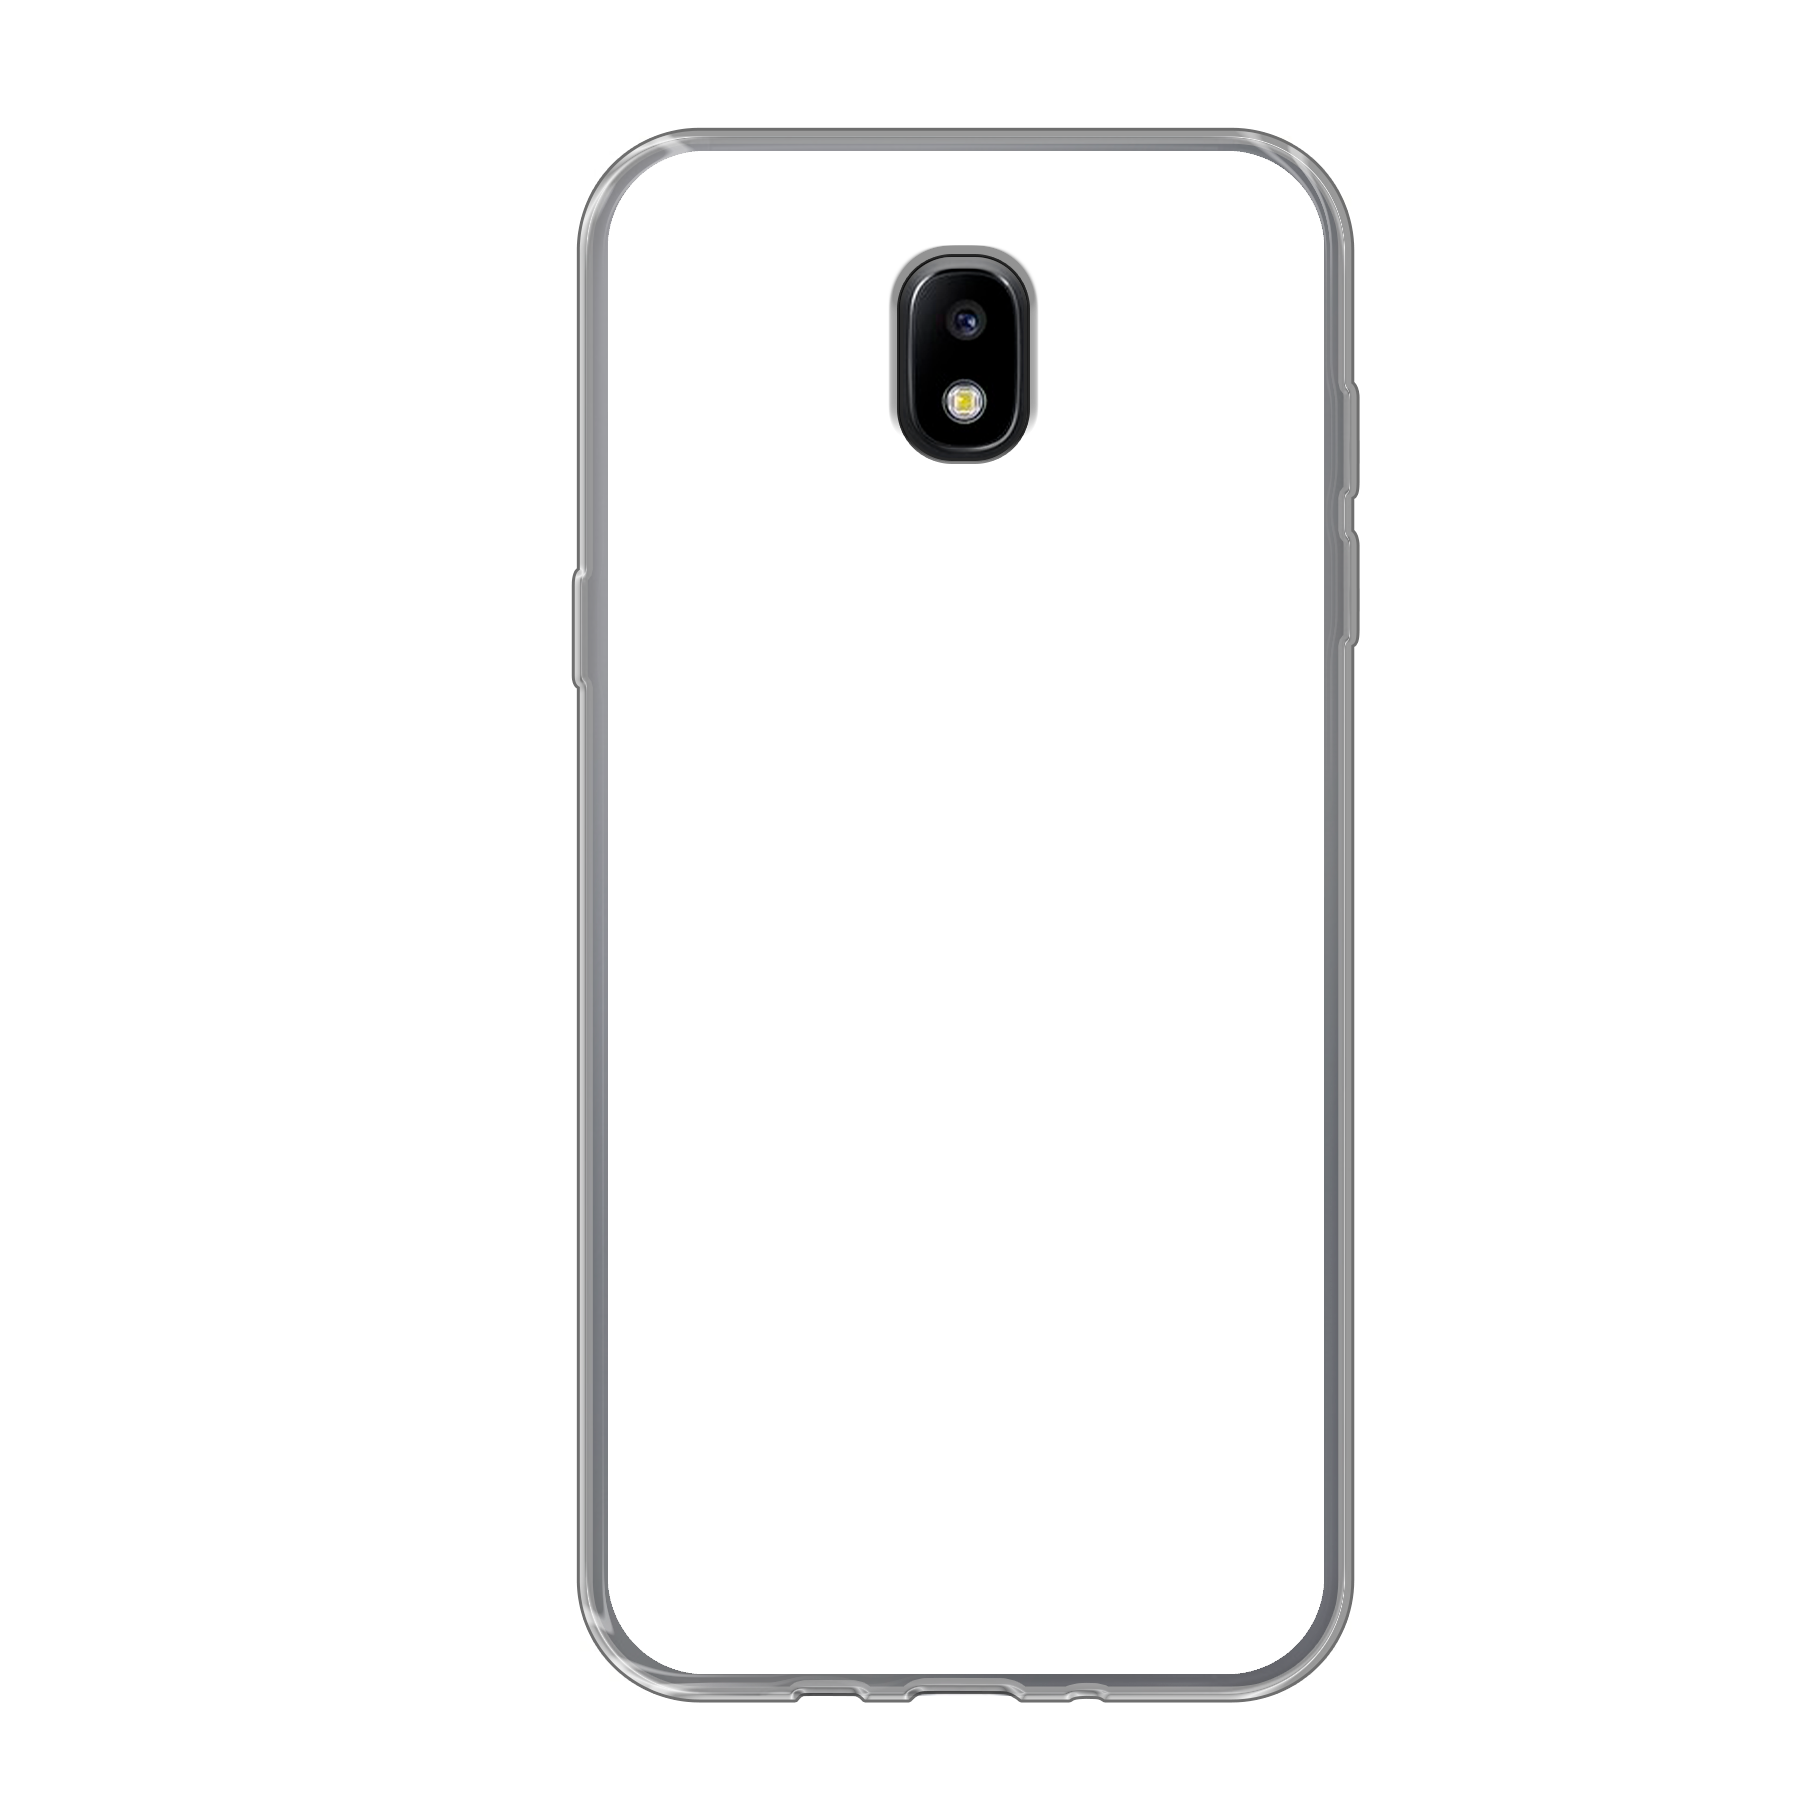 Samsung Galaxy J5 (2017) Soft case (back printed, transparent)